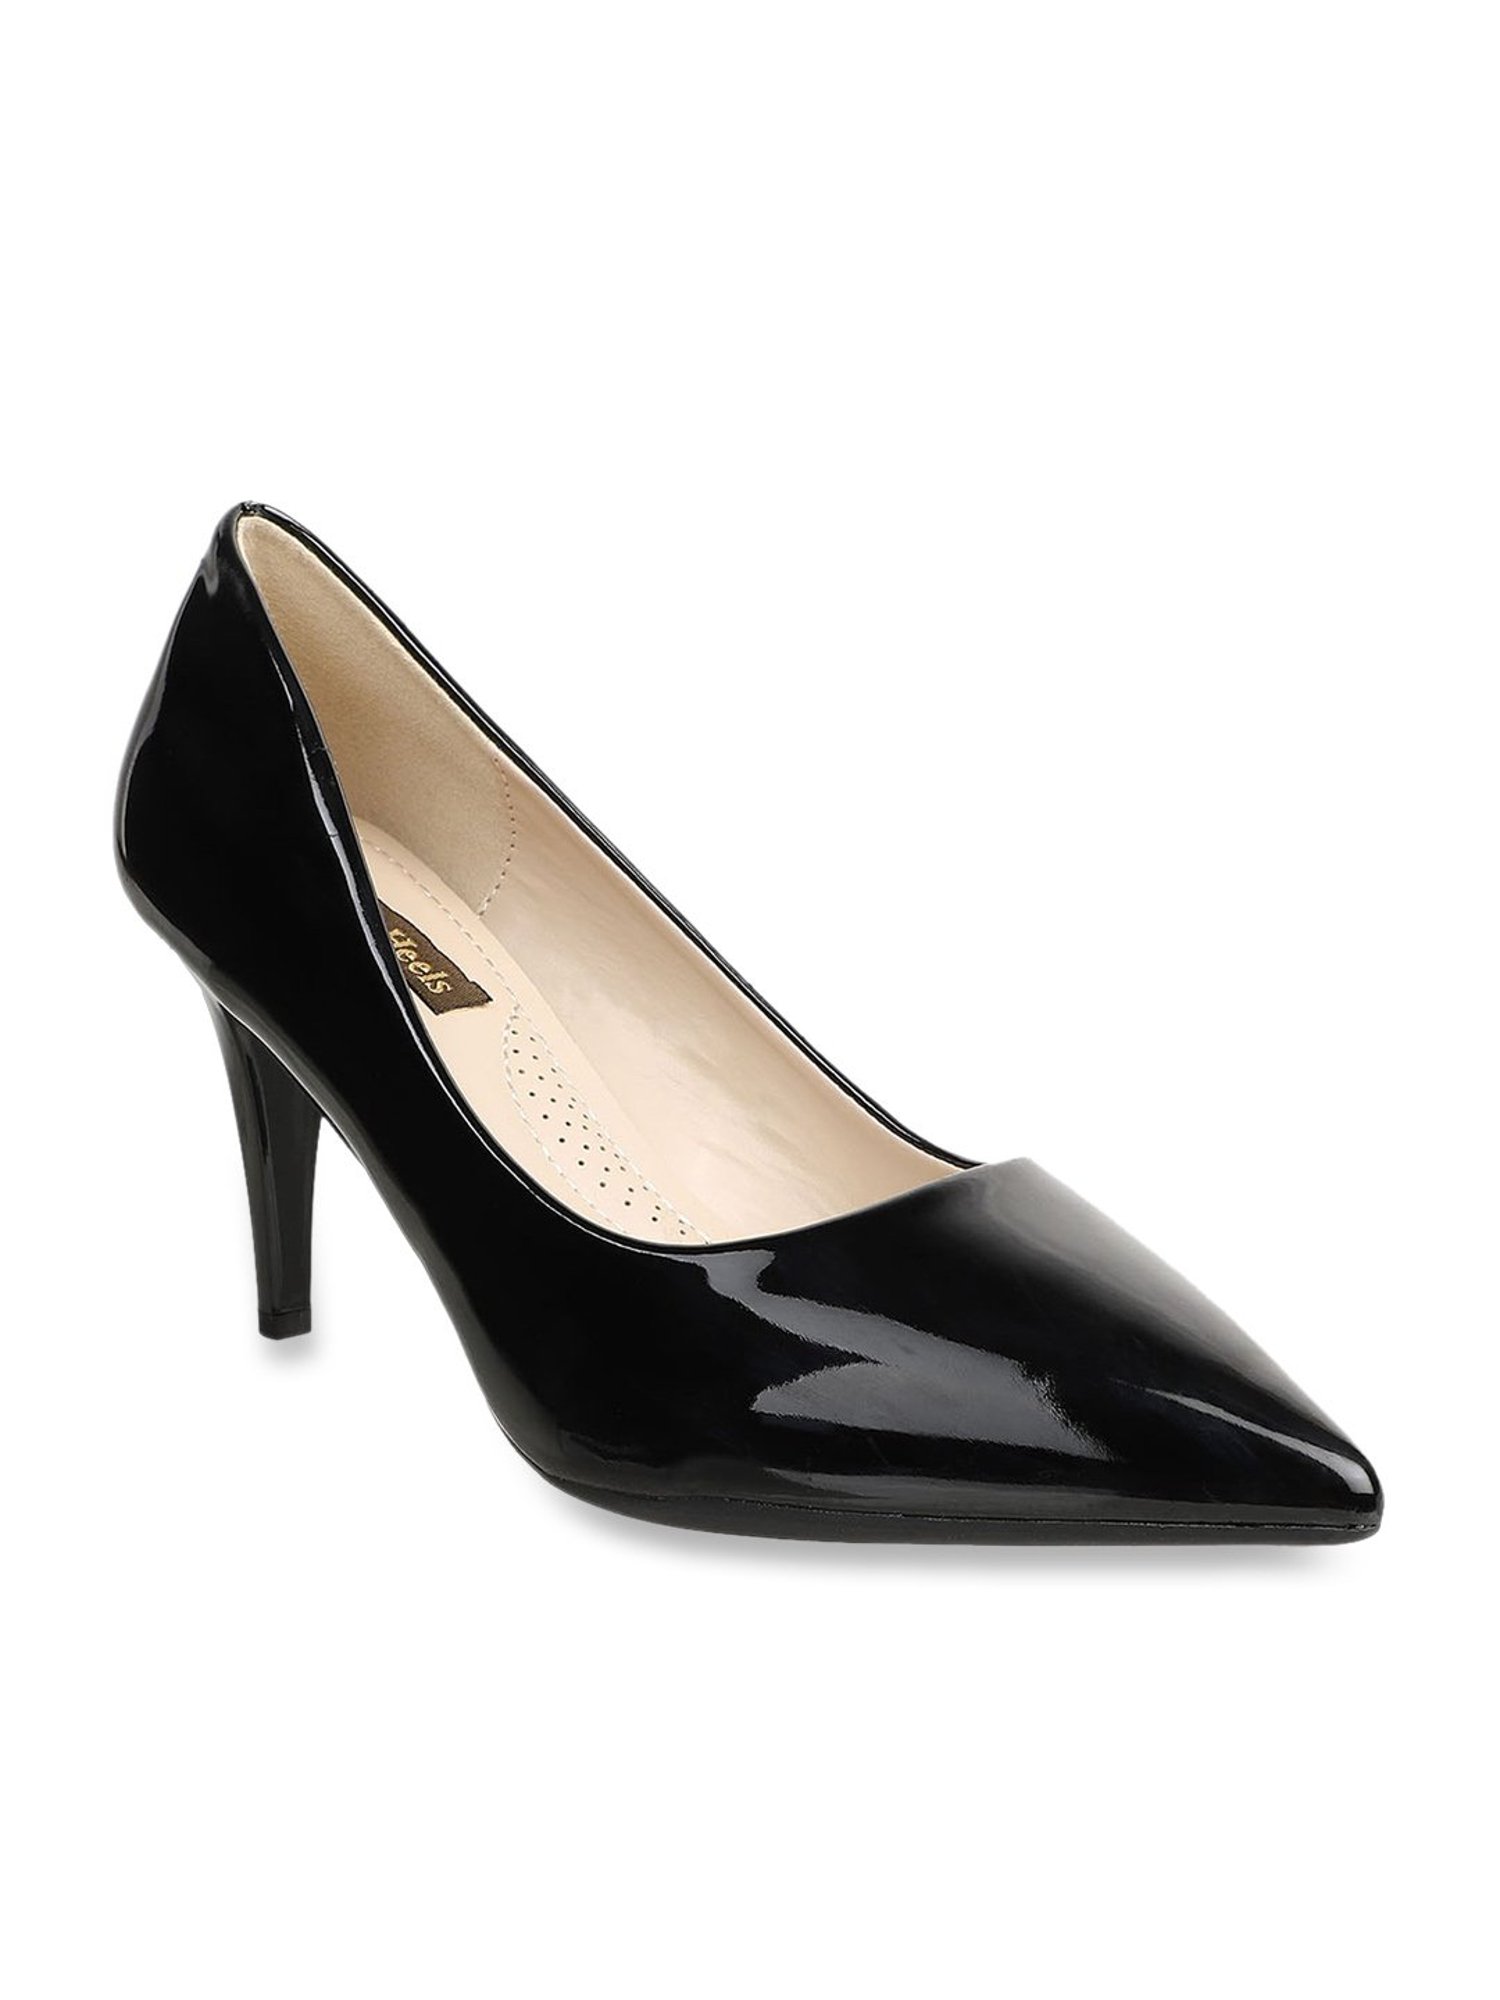 NeroGiardini Black Patent Leather High Heels - Pasma Shoes